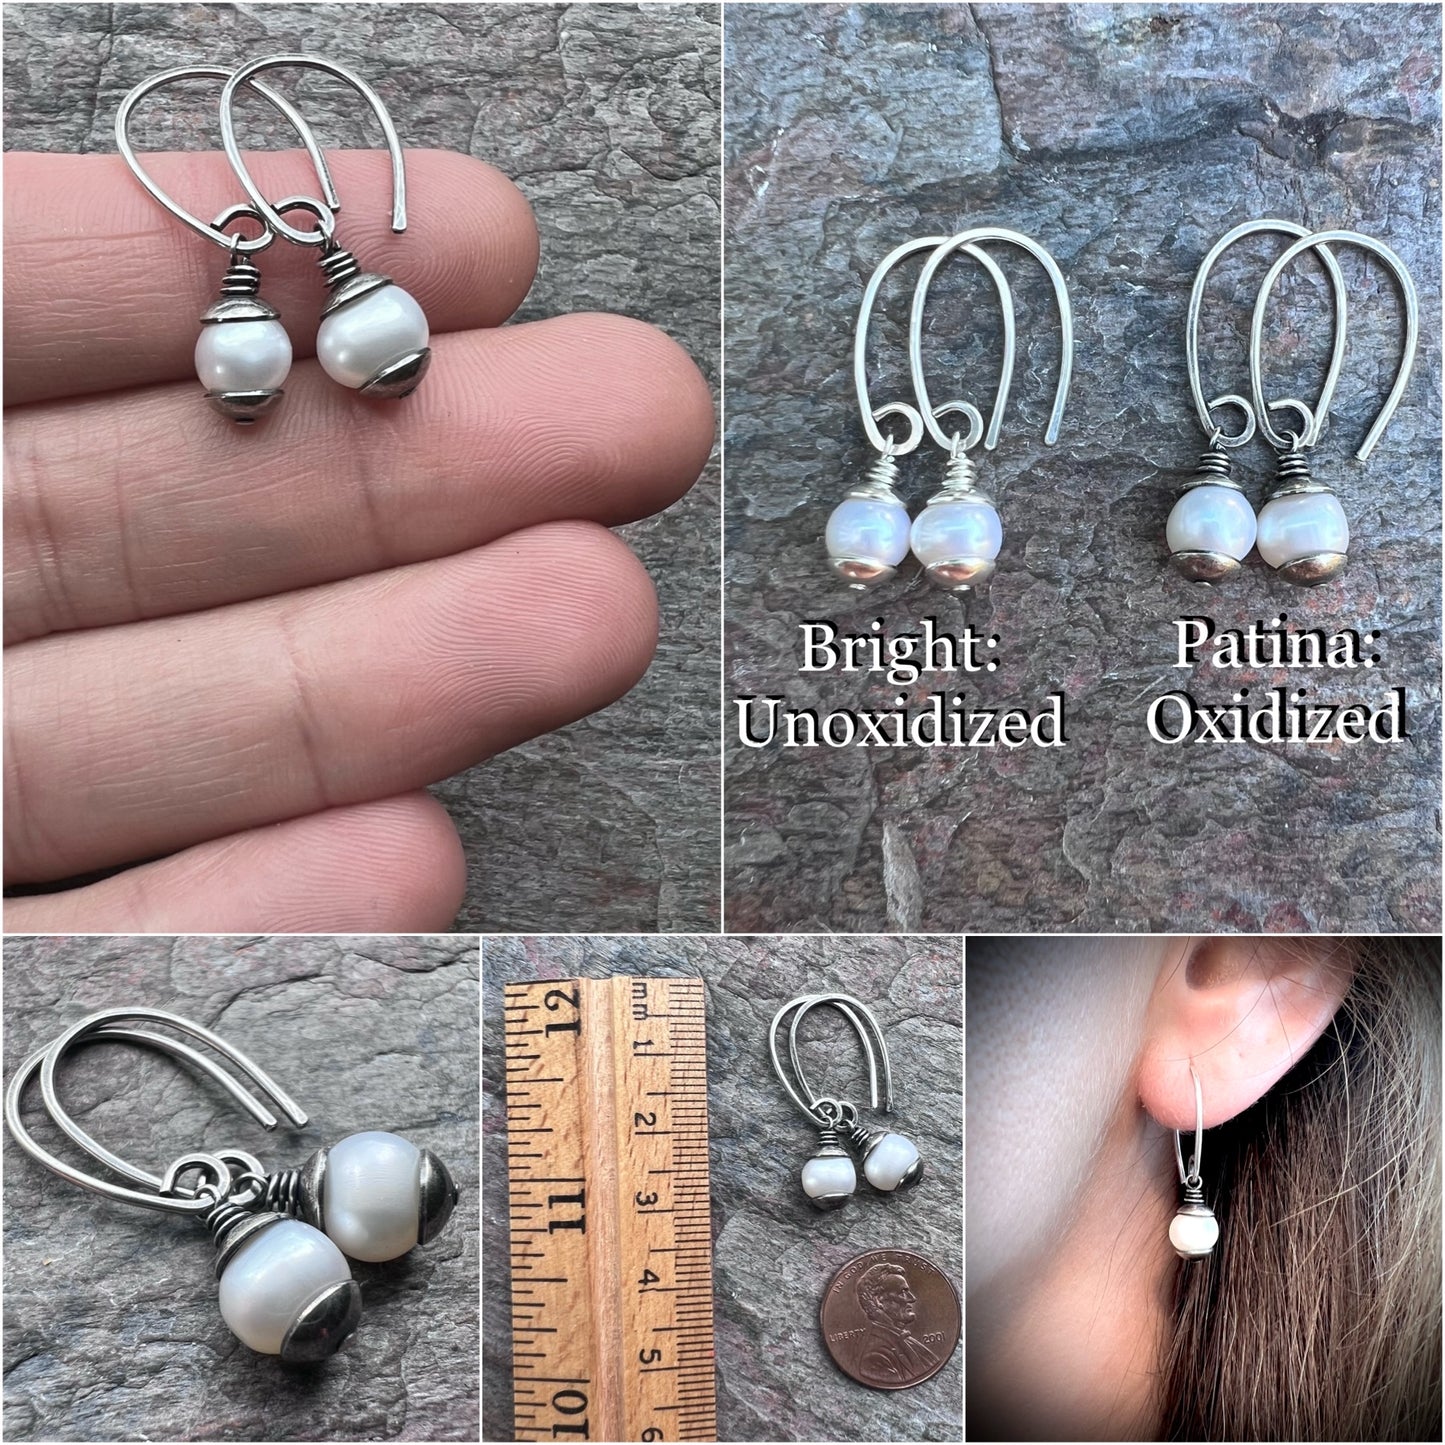 Sterling Silver Pearl Earrings - Small and Simple Genuine Freshwater Pearl Earrings